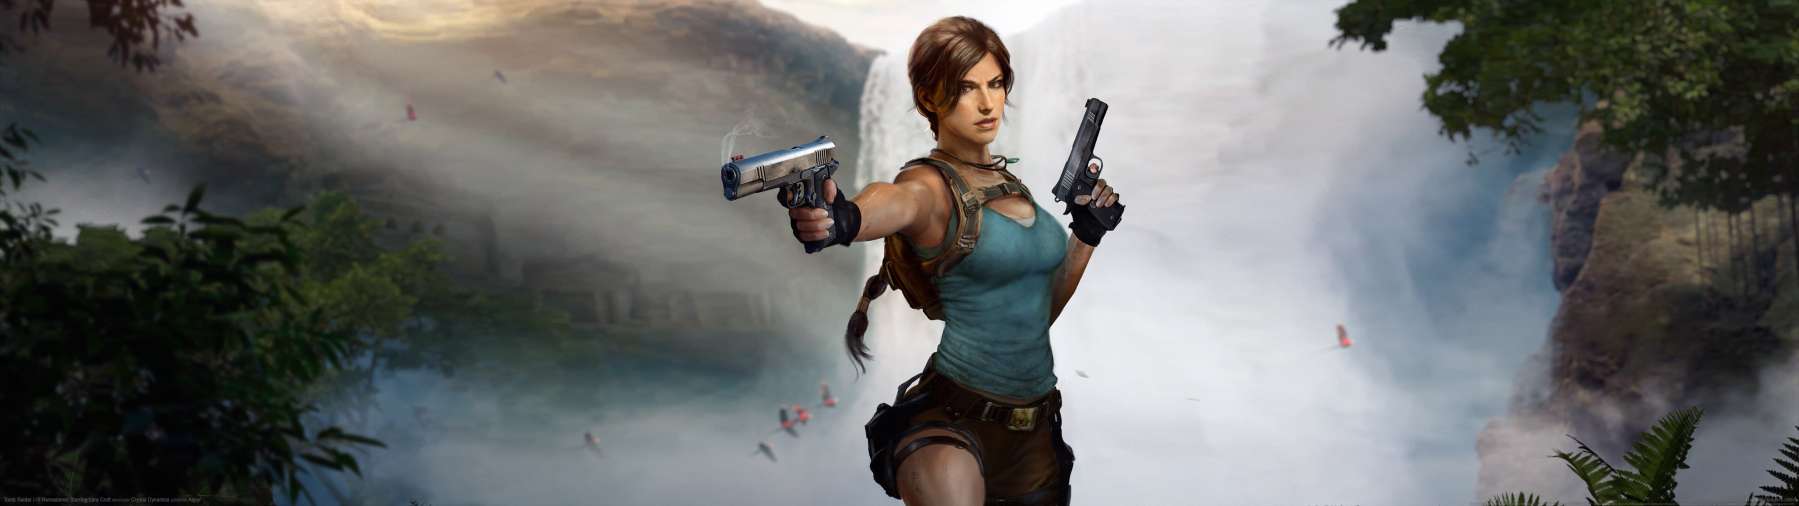 Tomb Raider I-III Remastered Starring Lara Croft superwide wallpaper or background 02